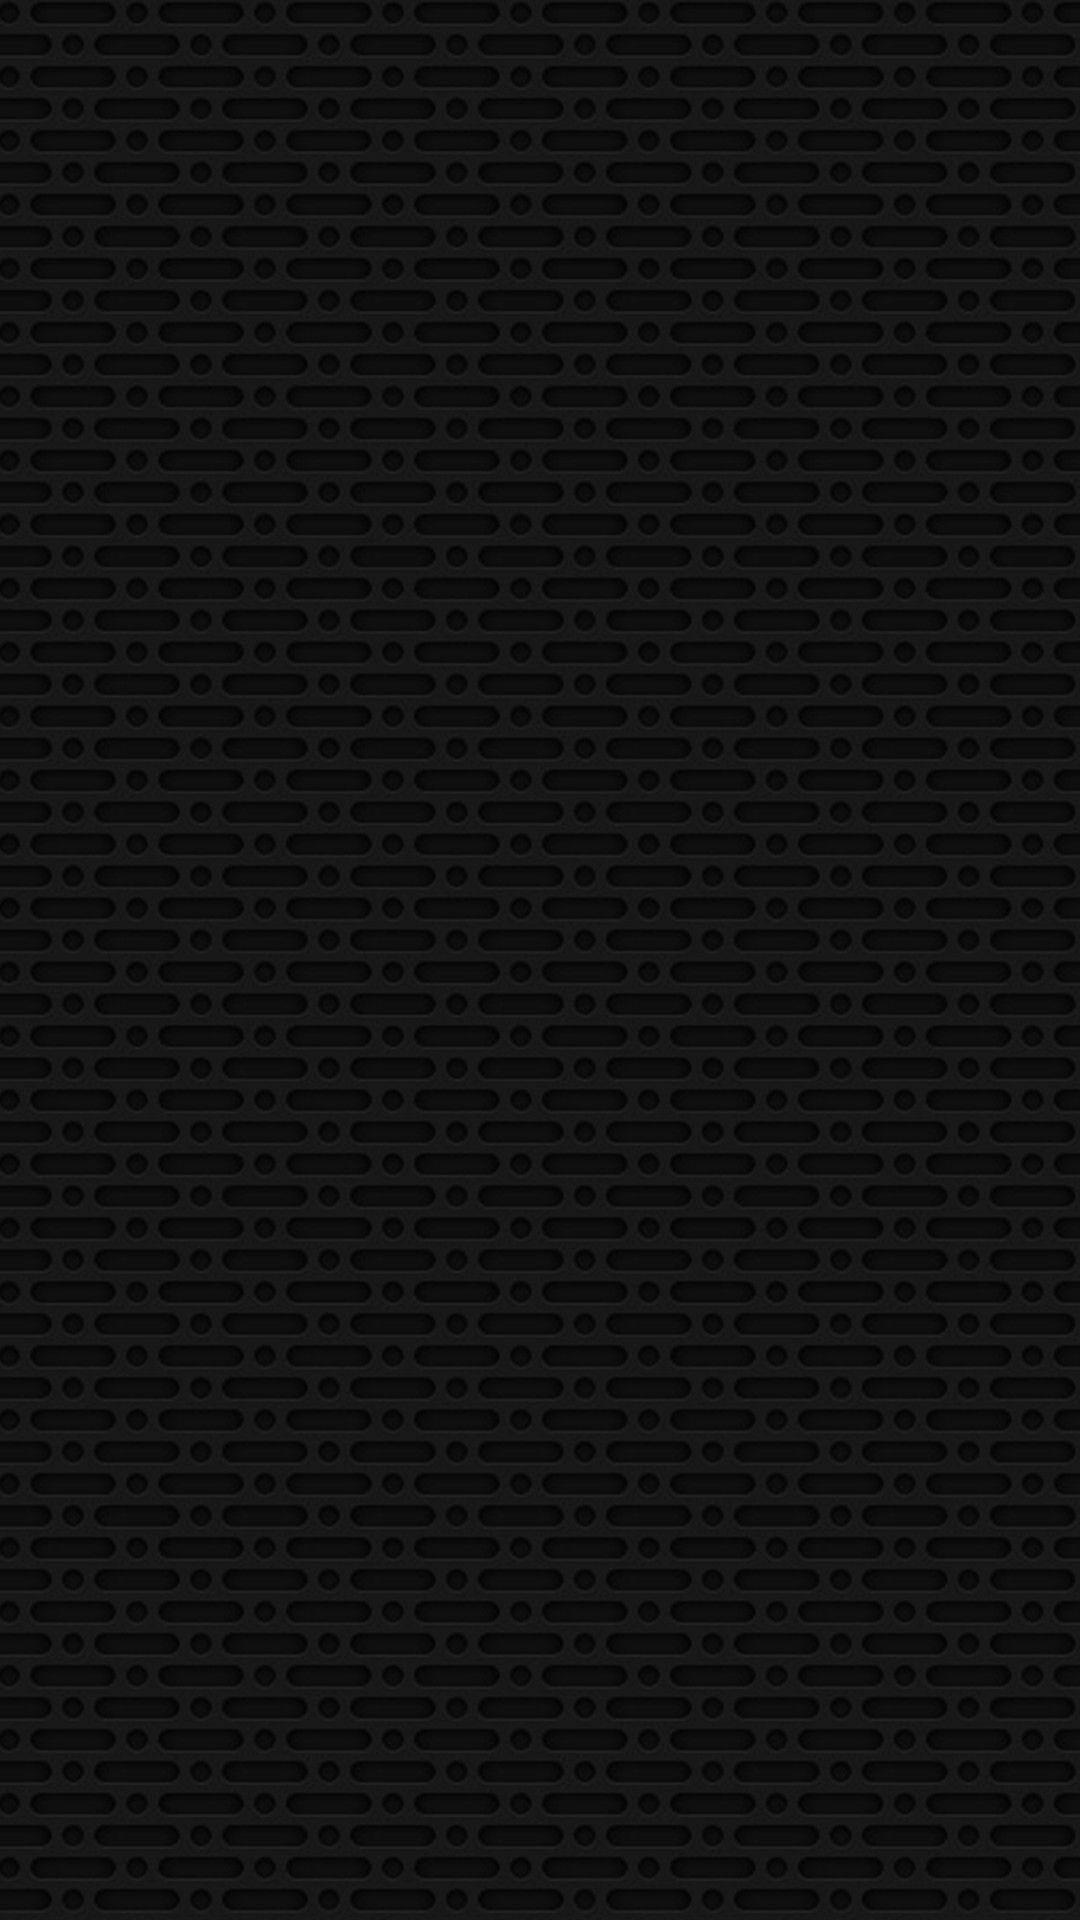 Black Elegant iPhone Wallpapers - Top Free Black Elegant iPhone ...